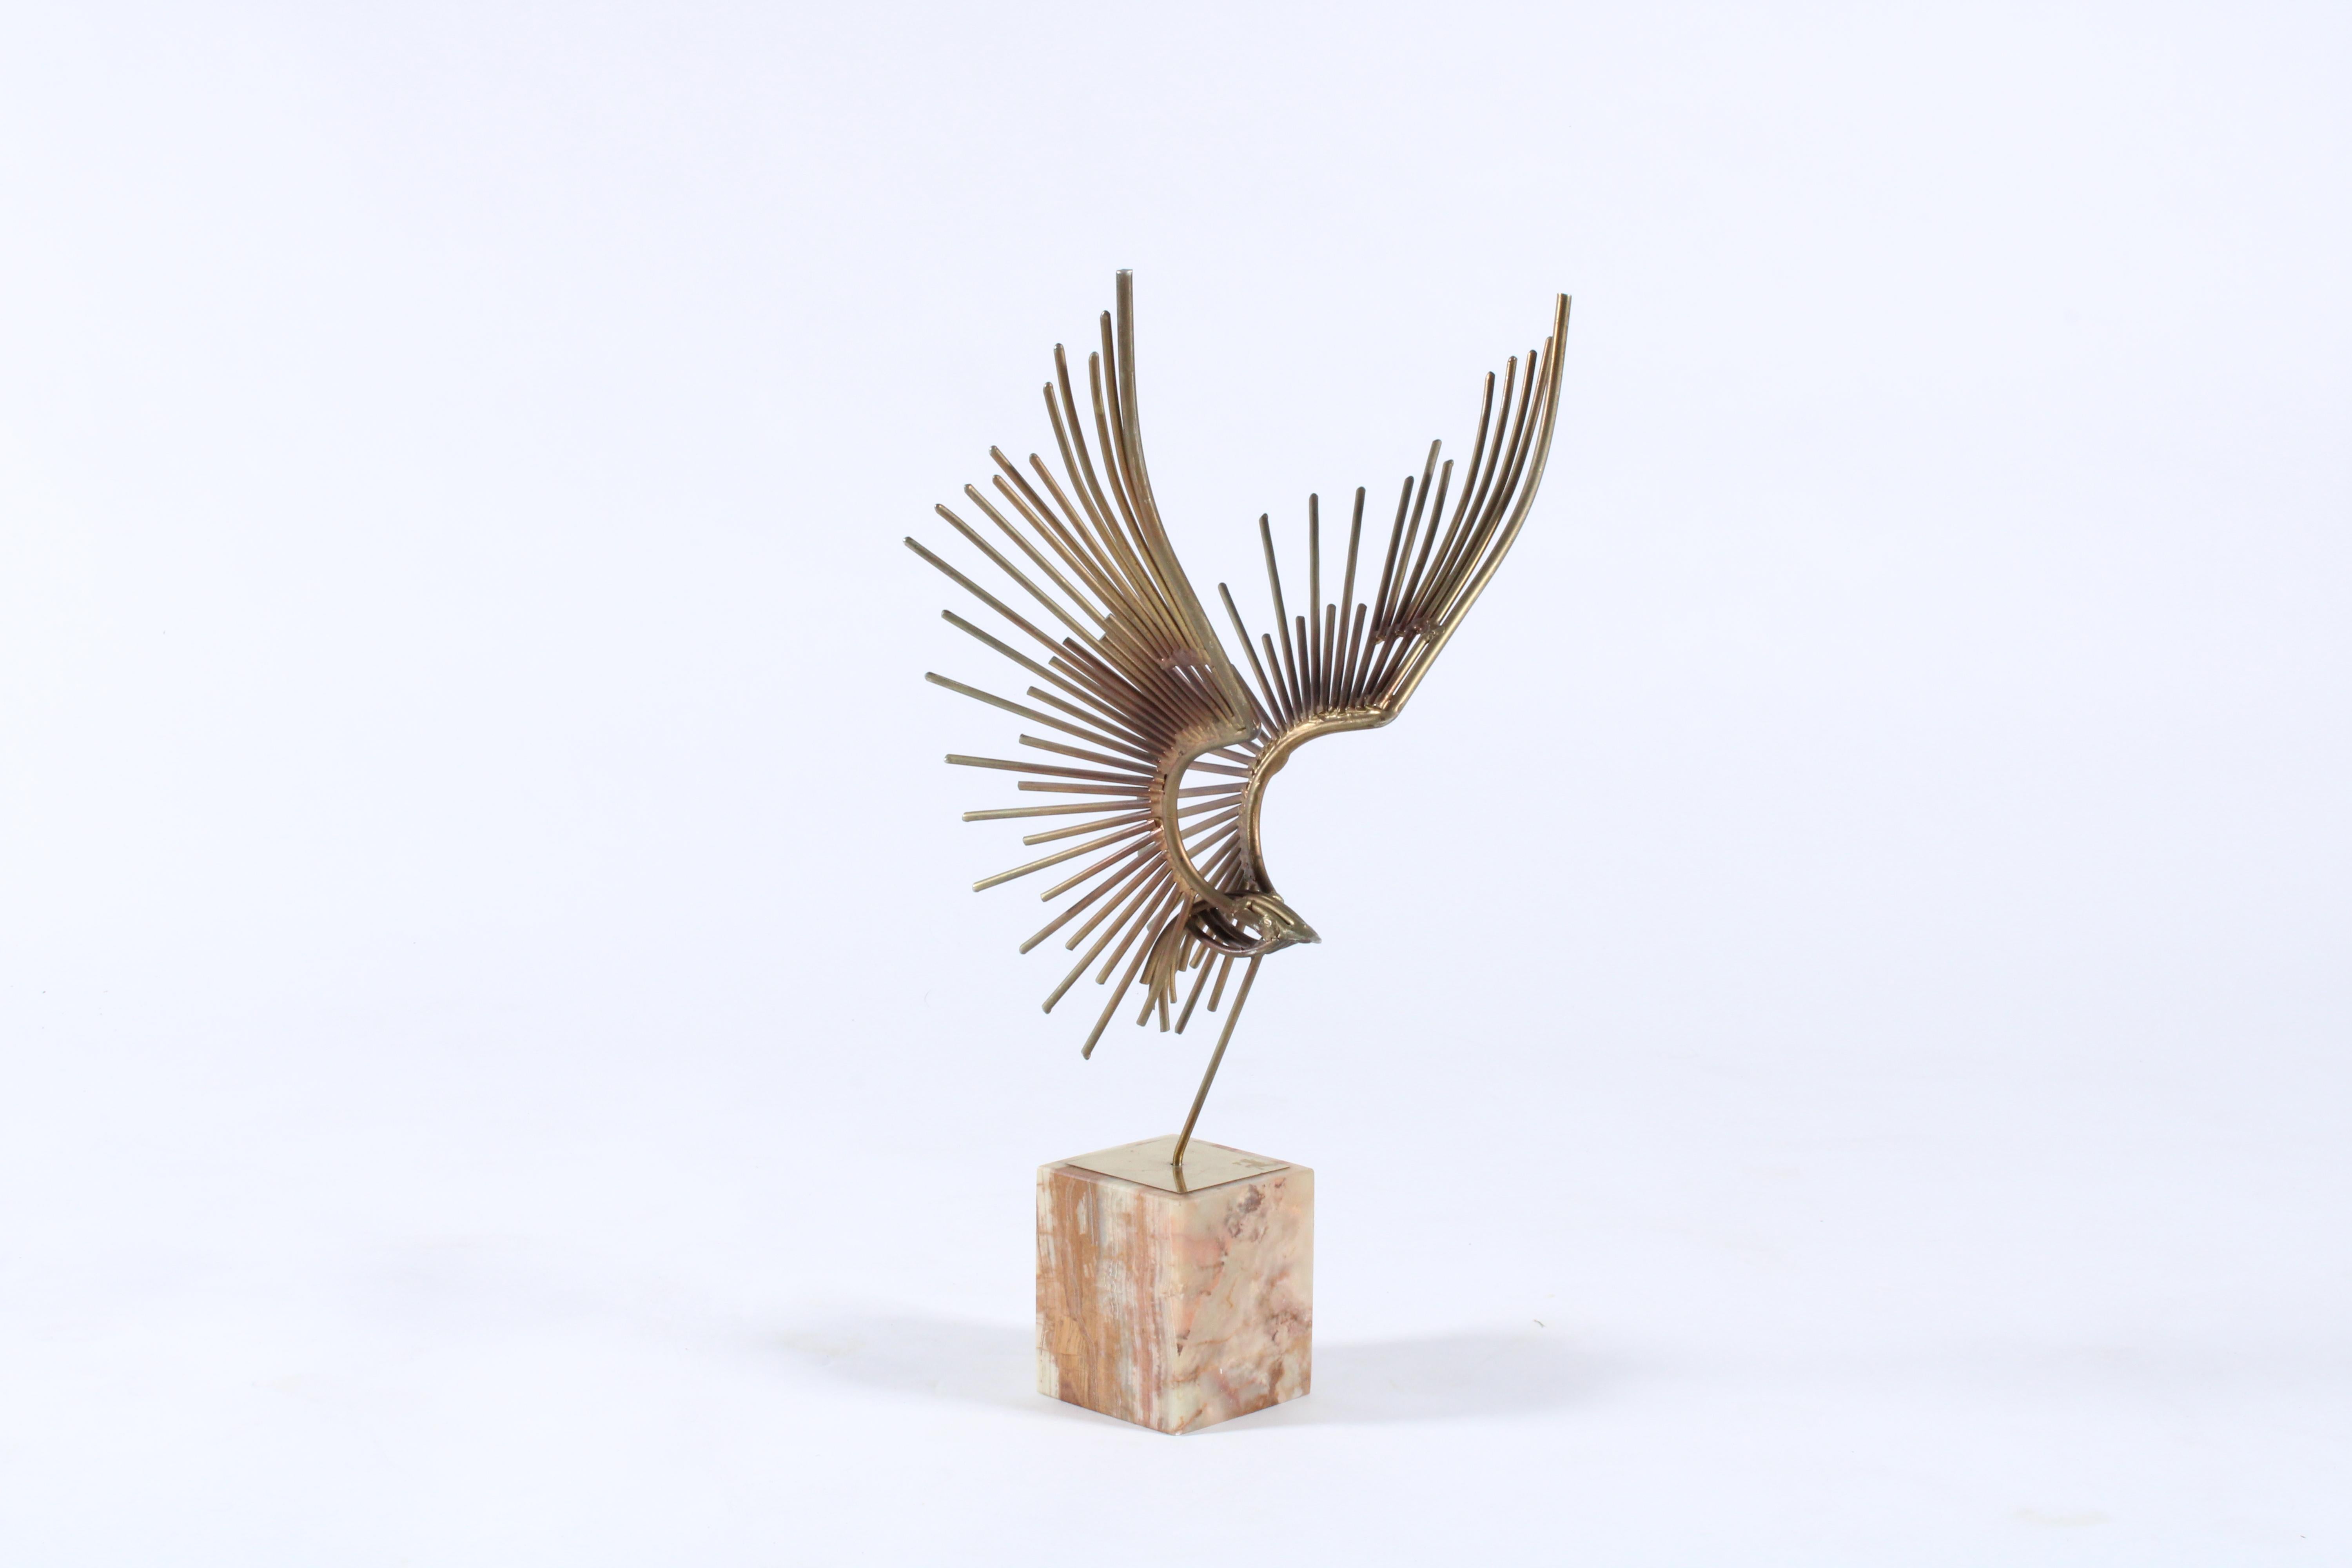 'Bird In Flight' welded sculpture attributed to Curtis Jere 2